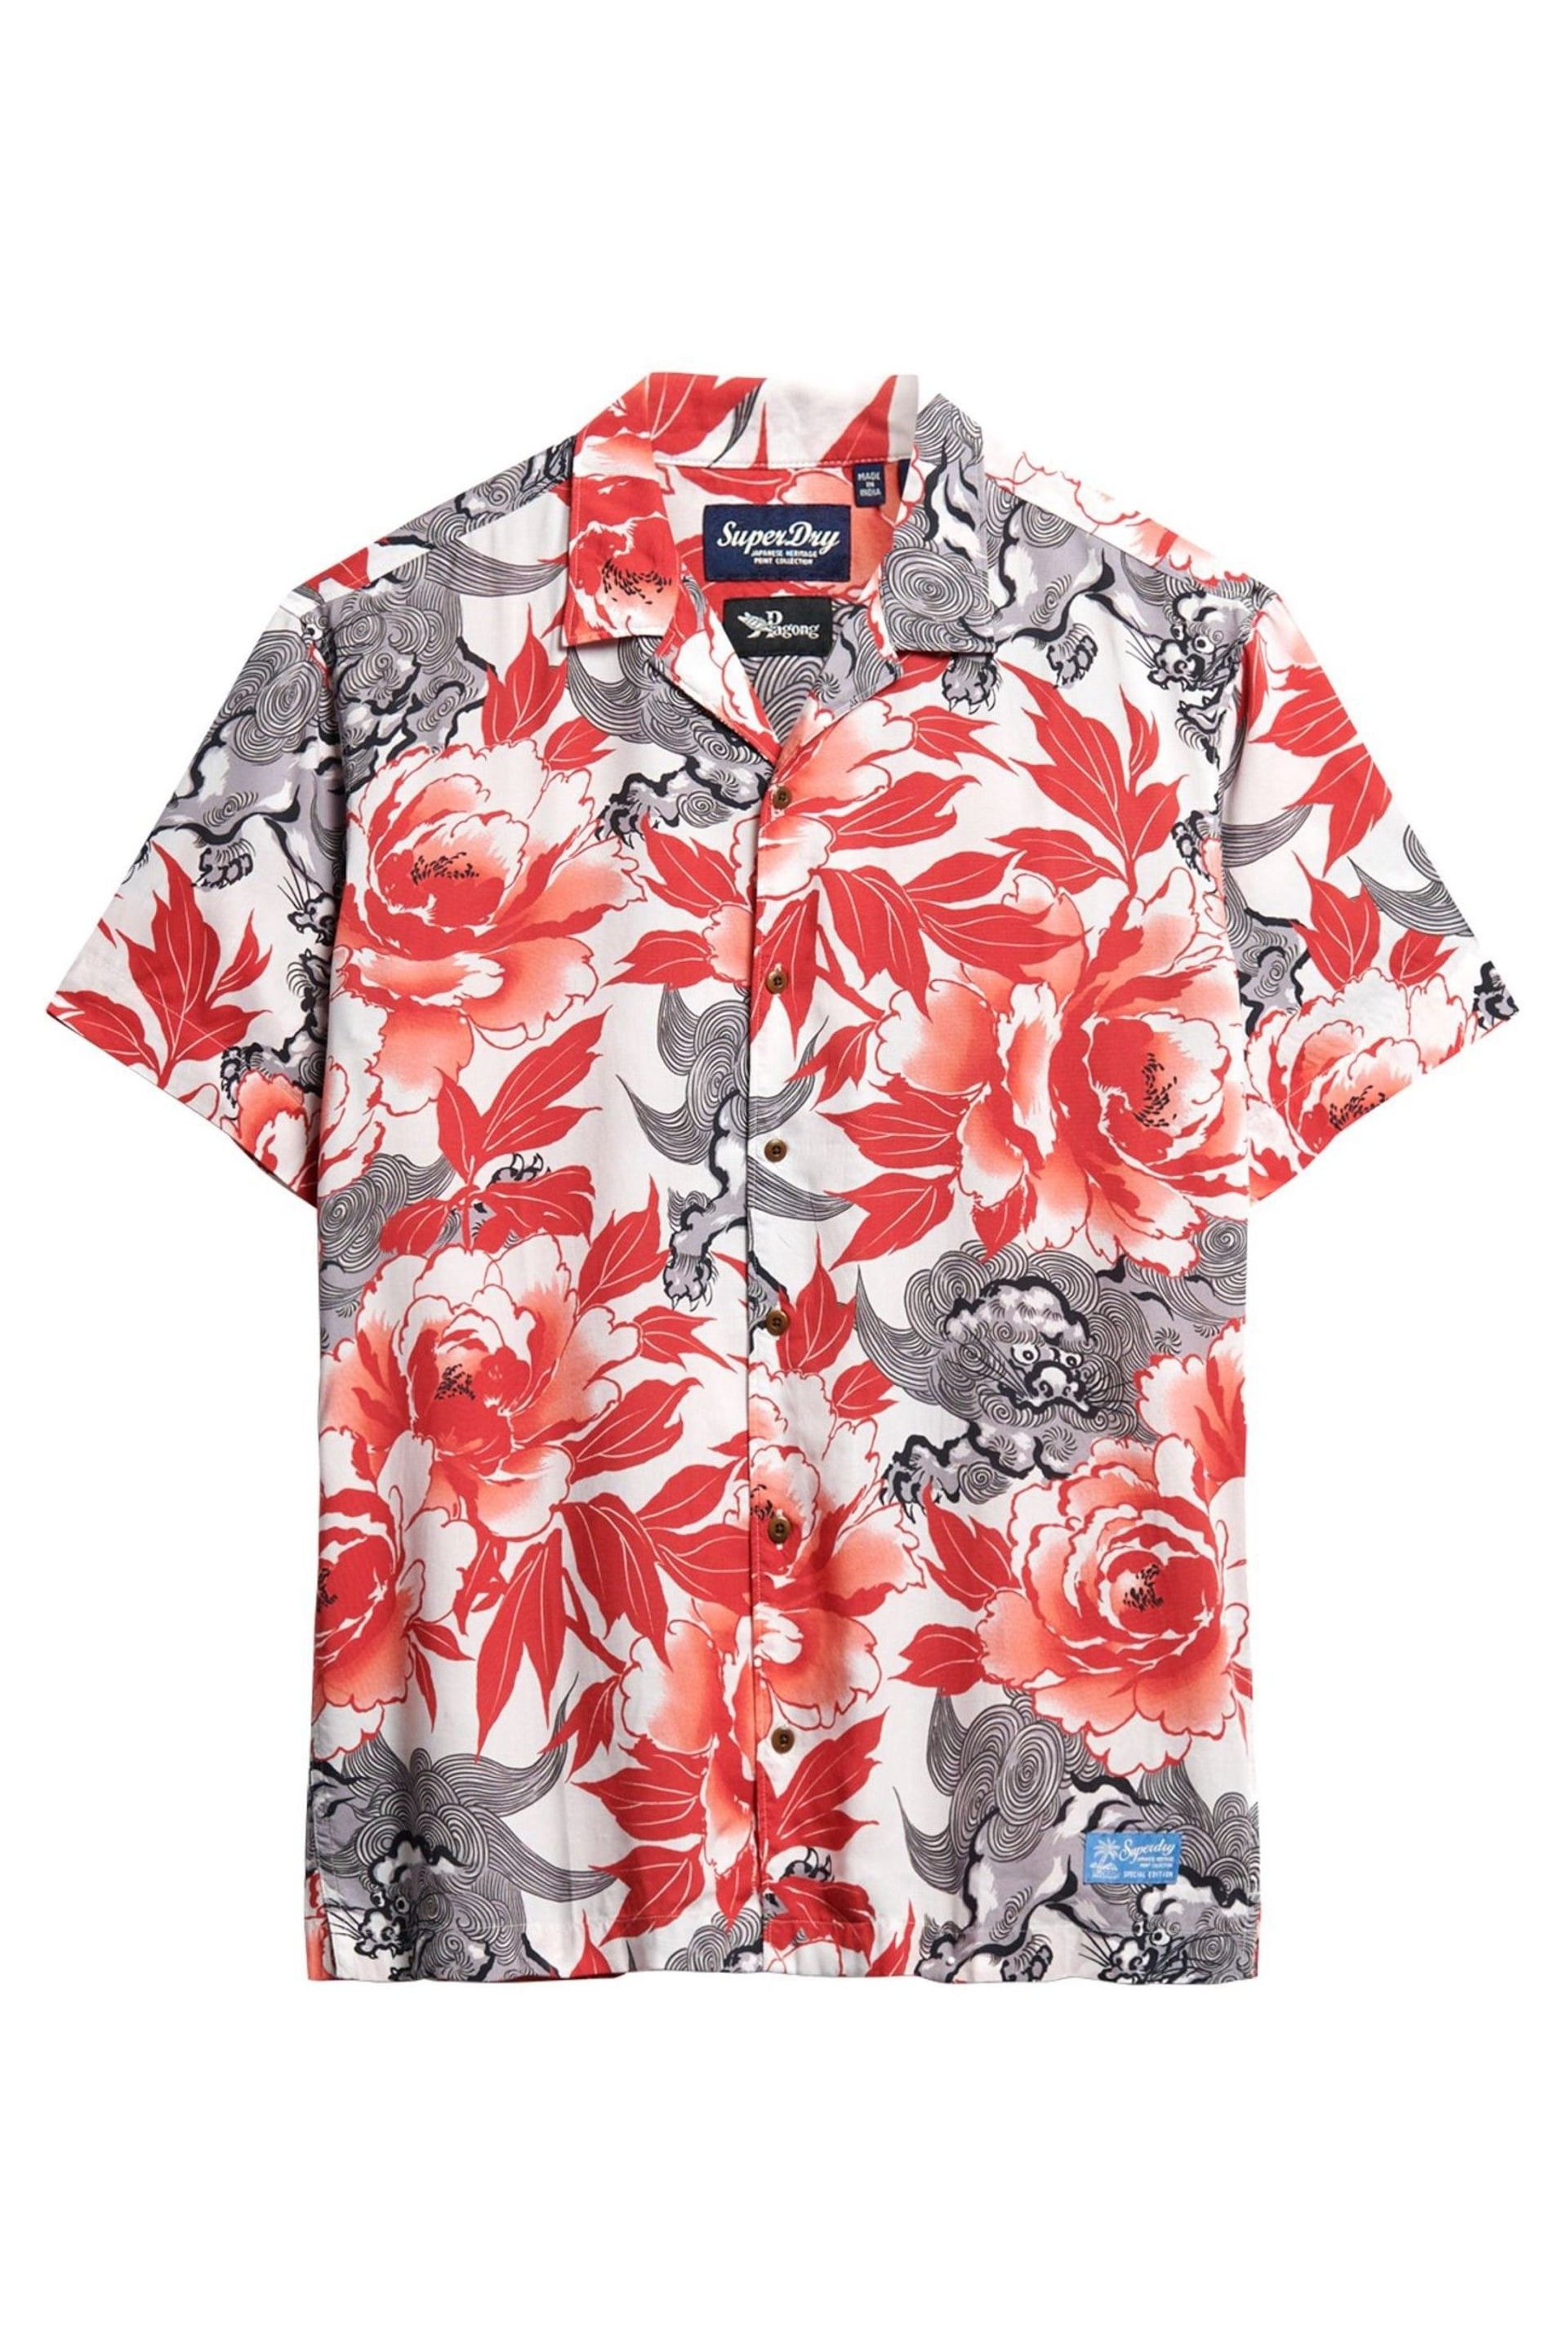 Superdry Red Multi Short Sleeve Hawaiian Printed Shirt - Image 4 of 7